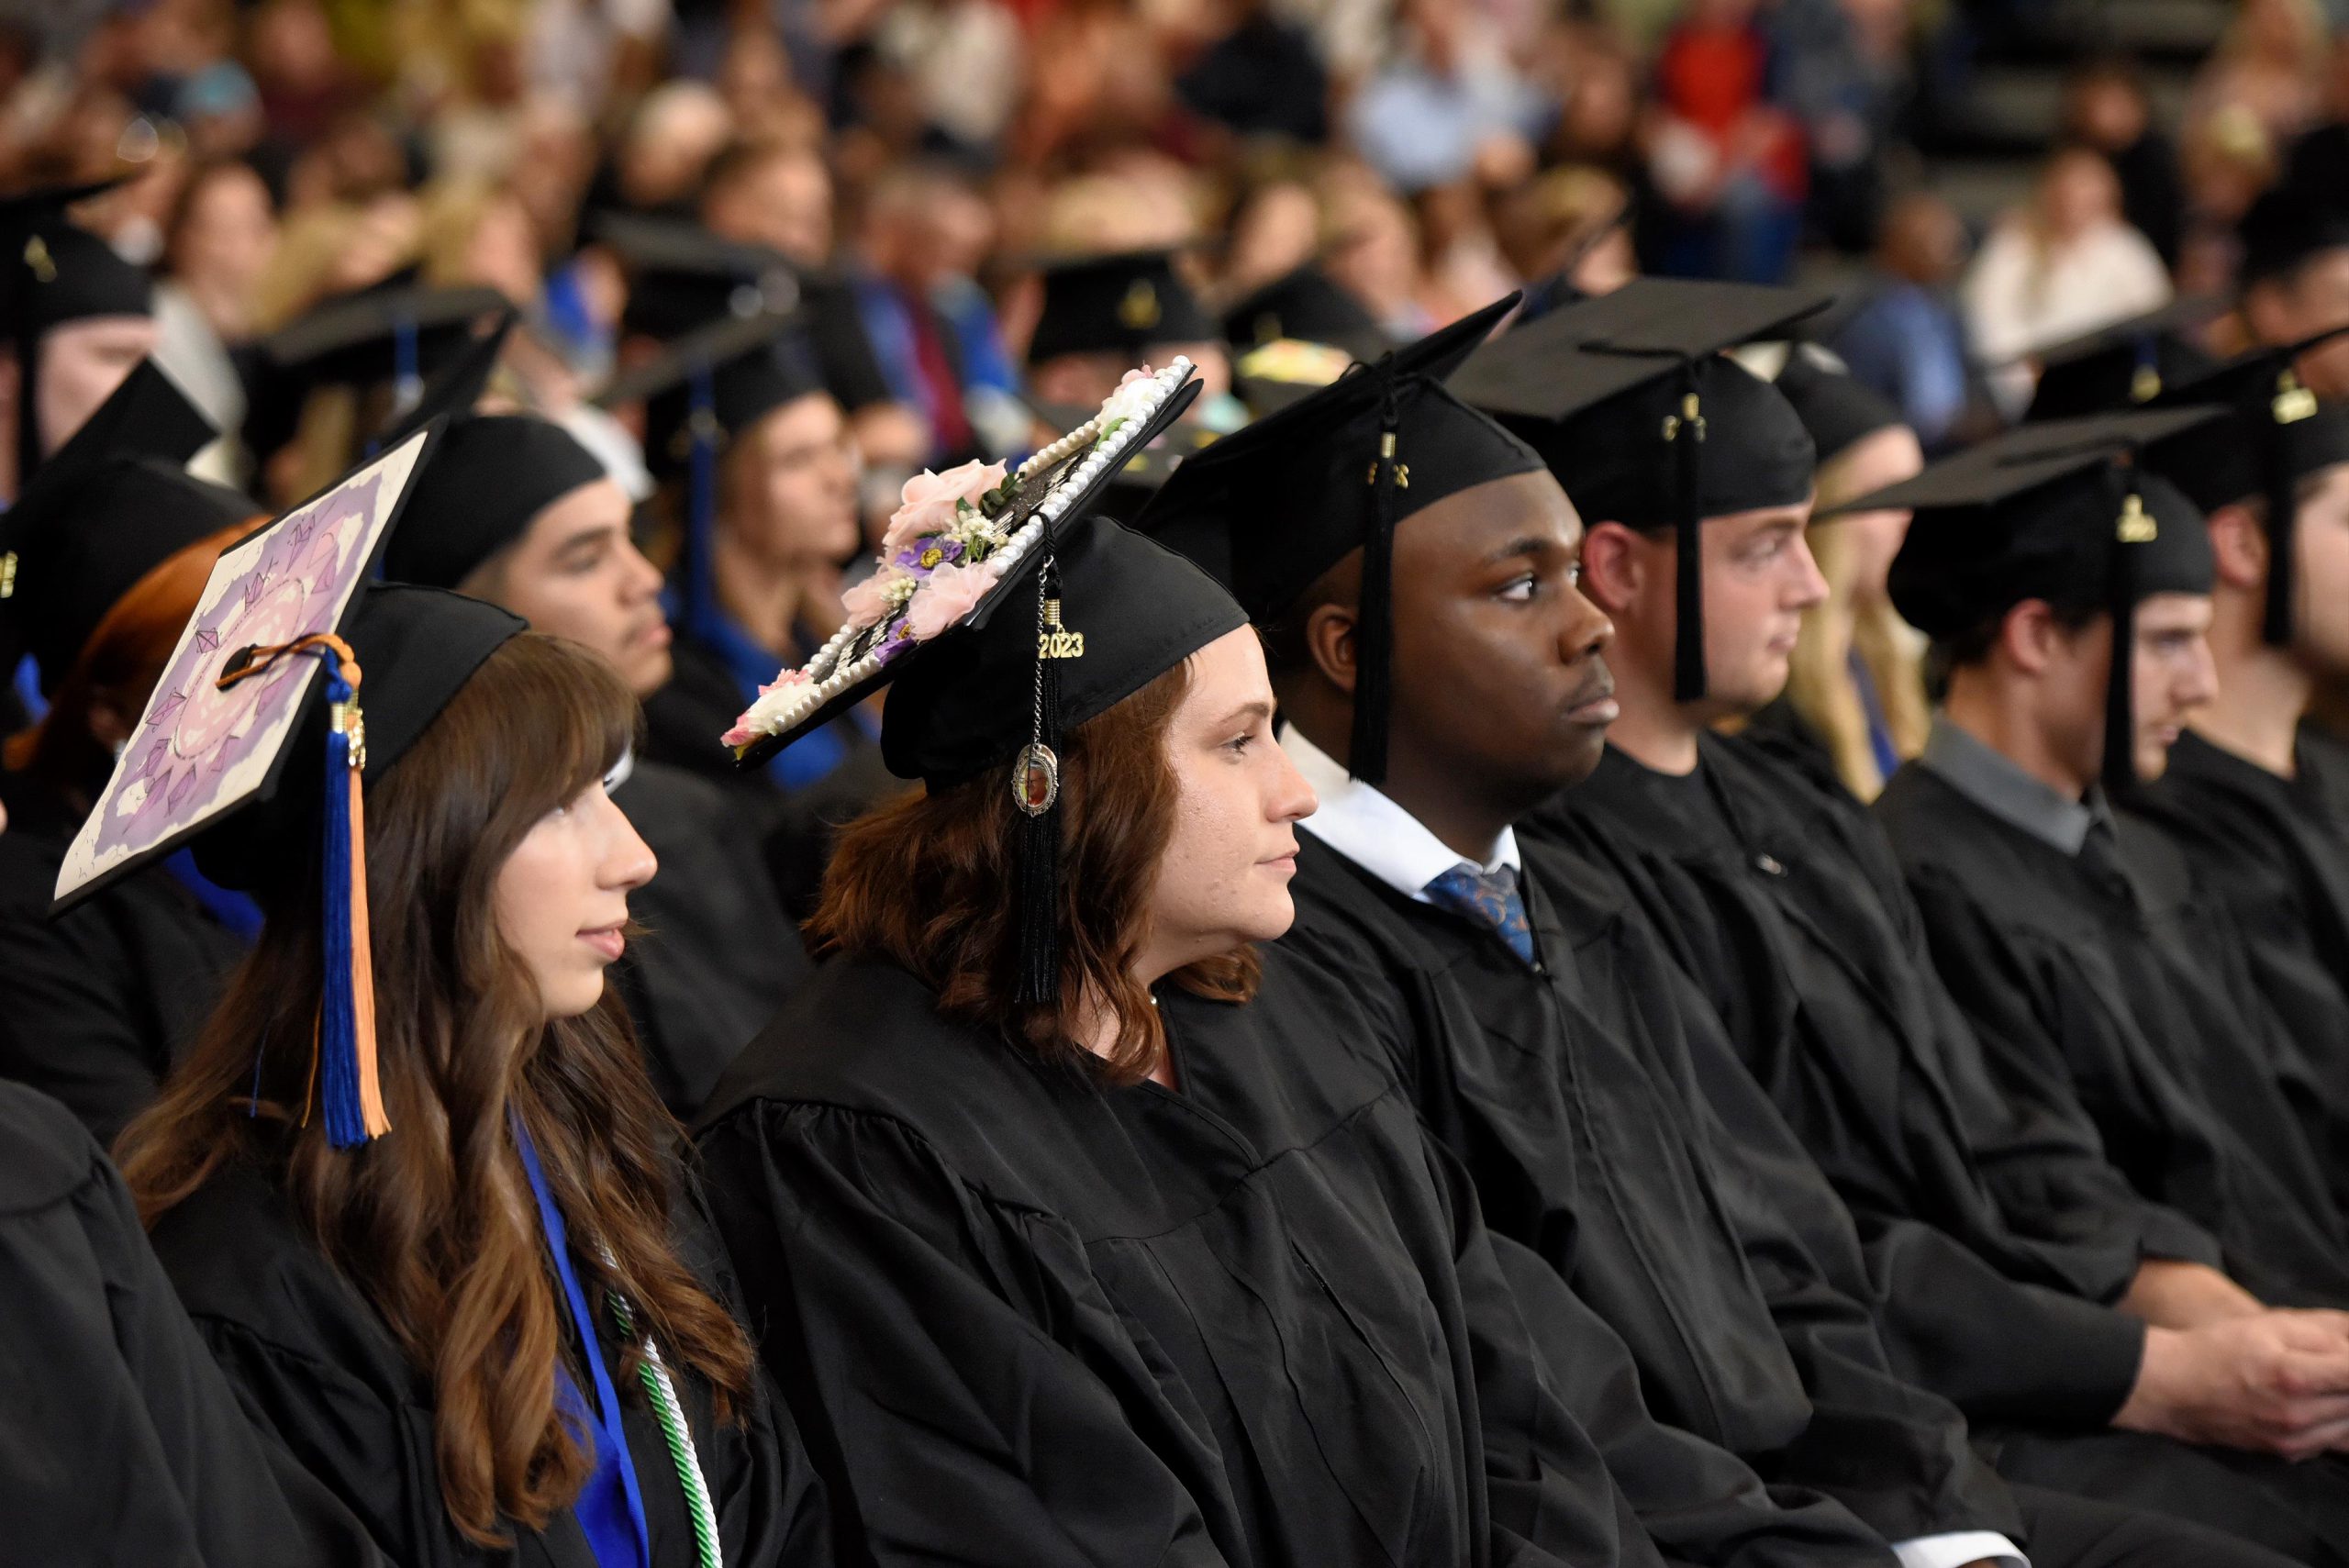 2023 Graduates sit listening during commencement ceremony.